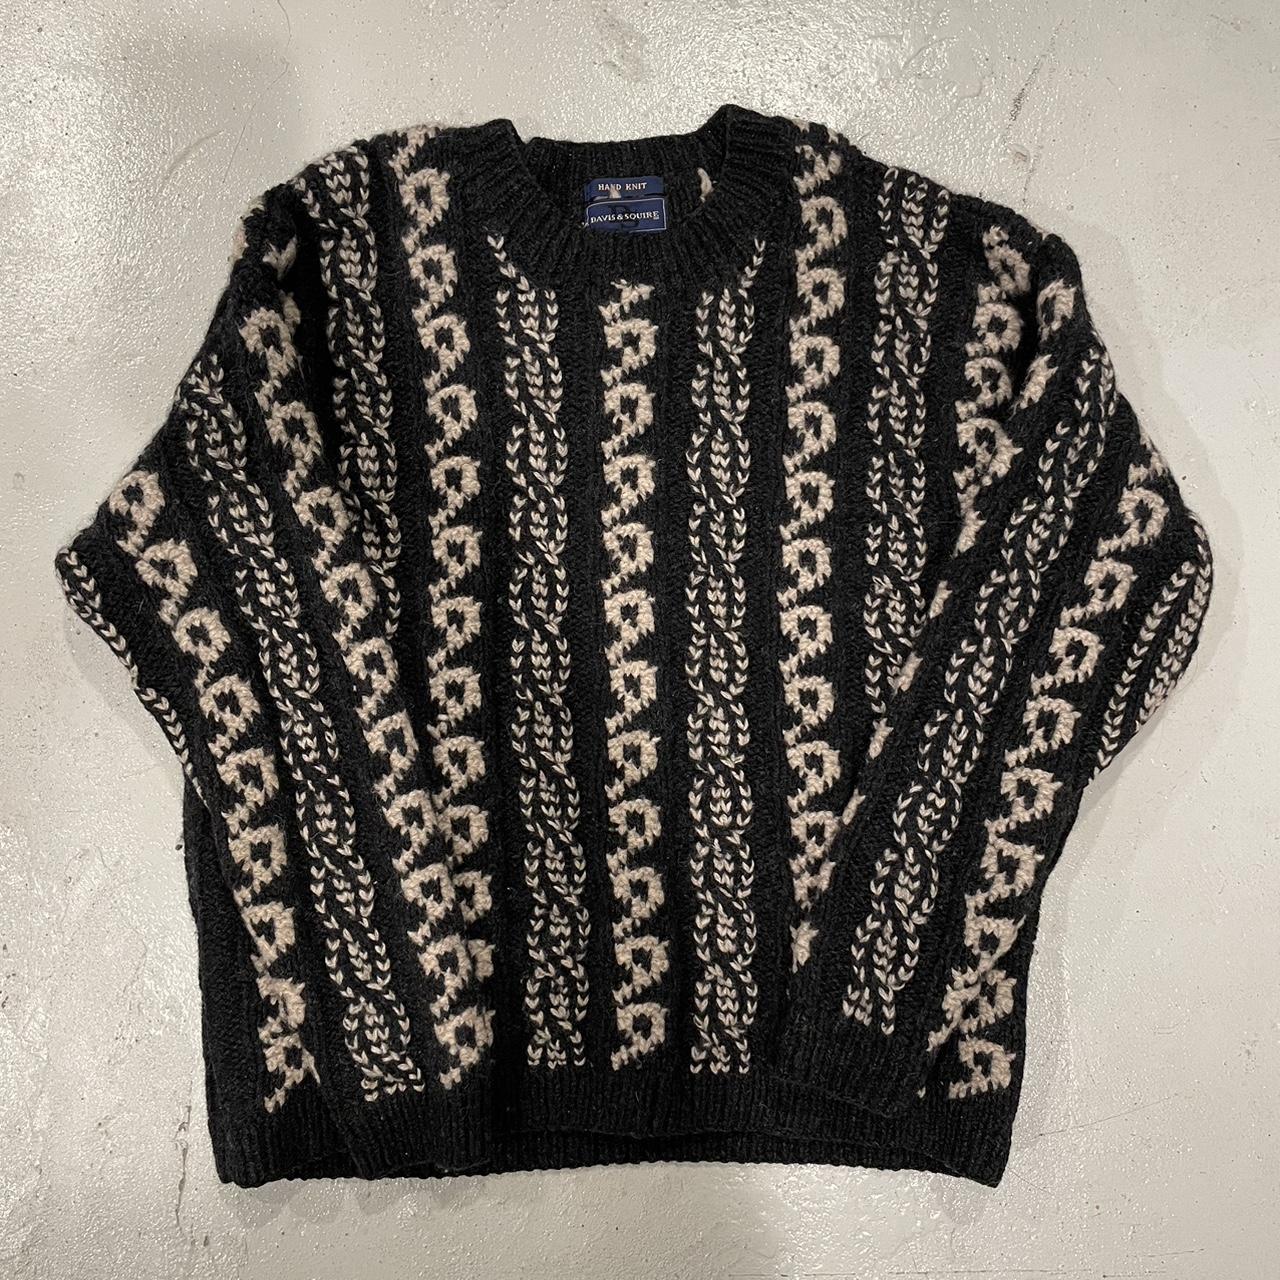 Davis & Squire Hand Knit Flower Print Wool Sweater - Depop